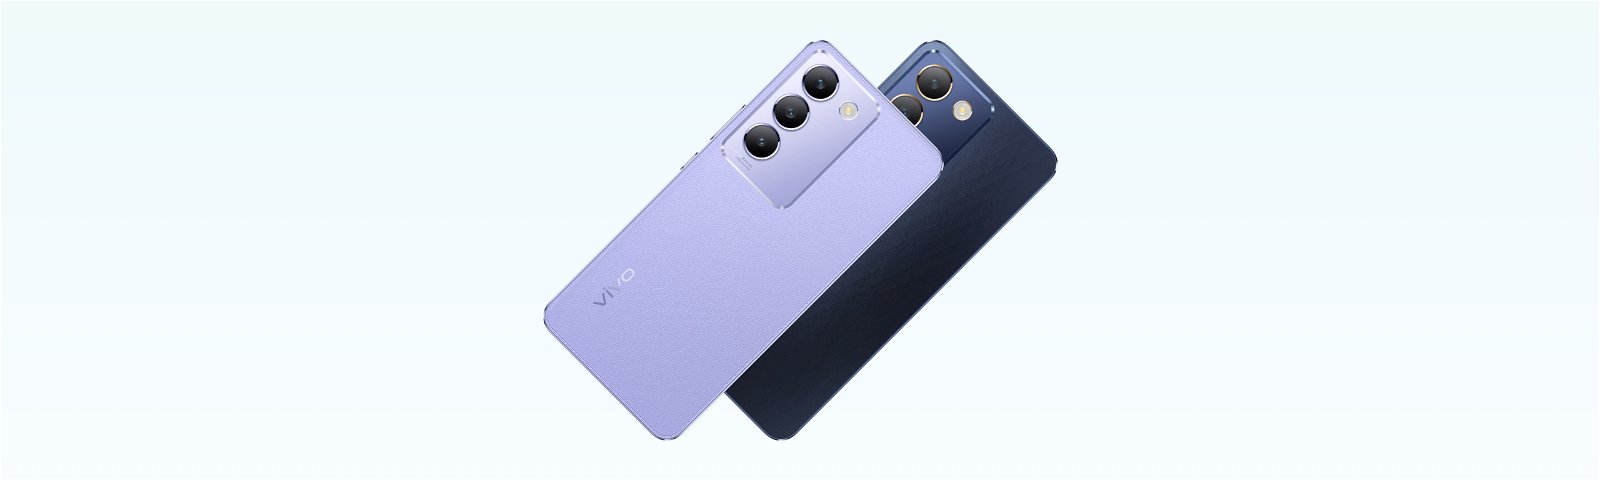 Nuevo vivo V40 SE: pantalla a 120 Hz, cámara principal de 50 MP y batería inmensa por menos de 300 euros